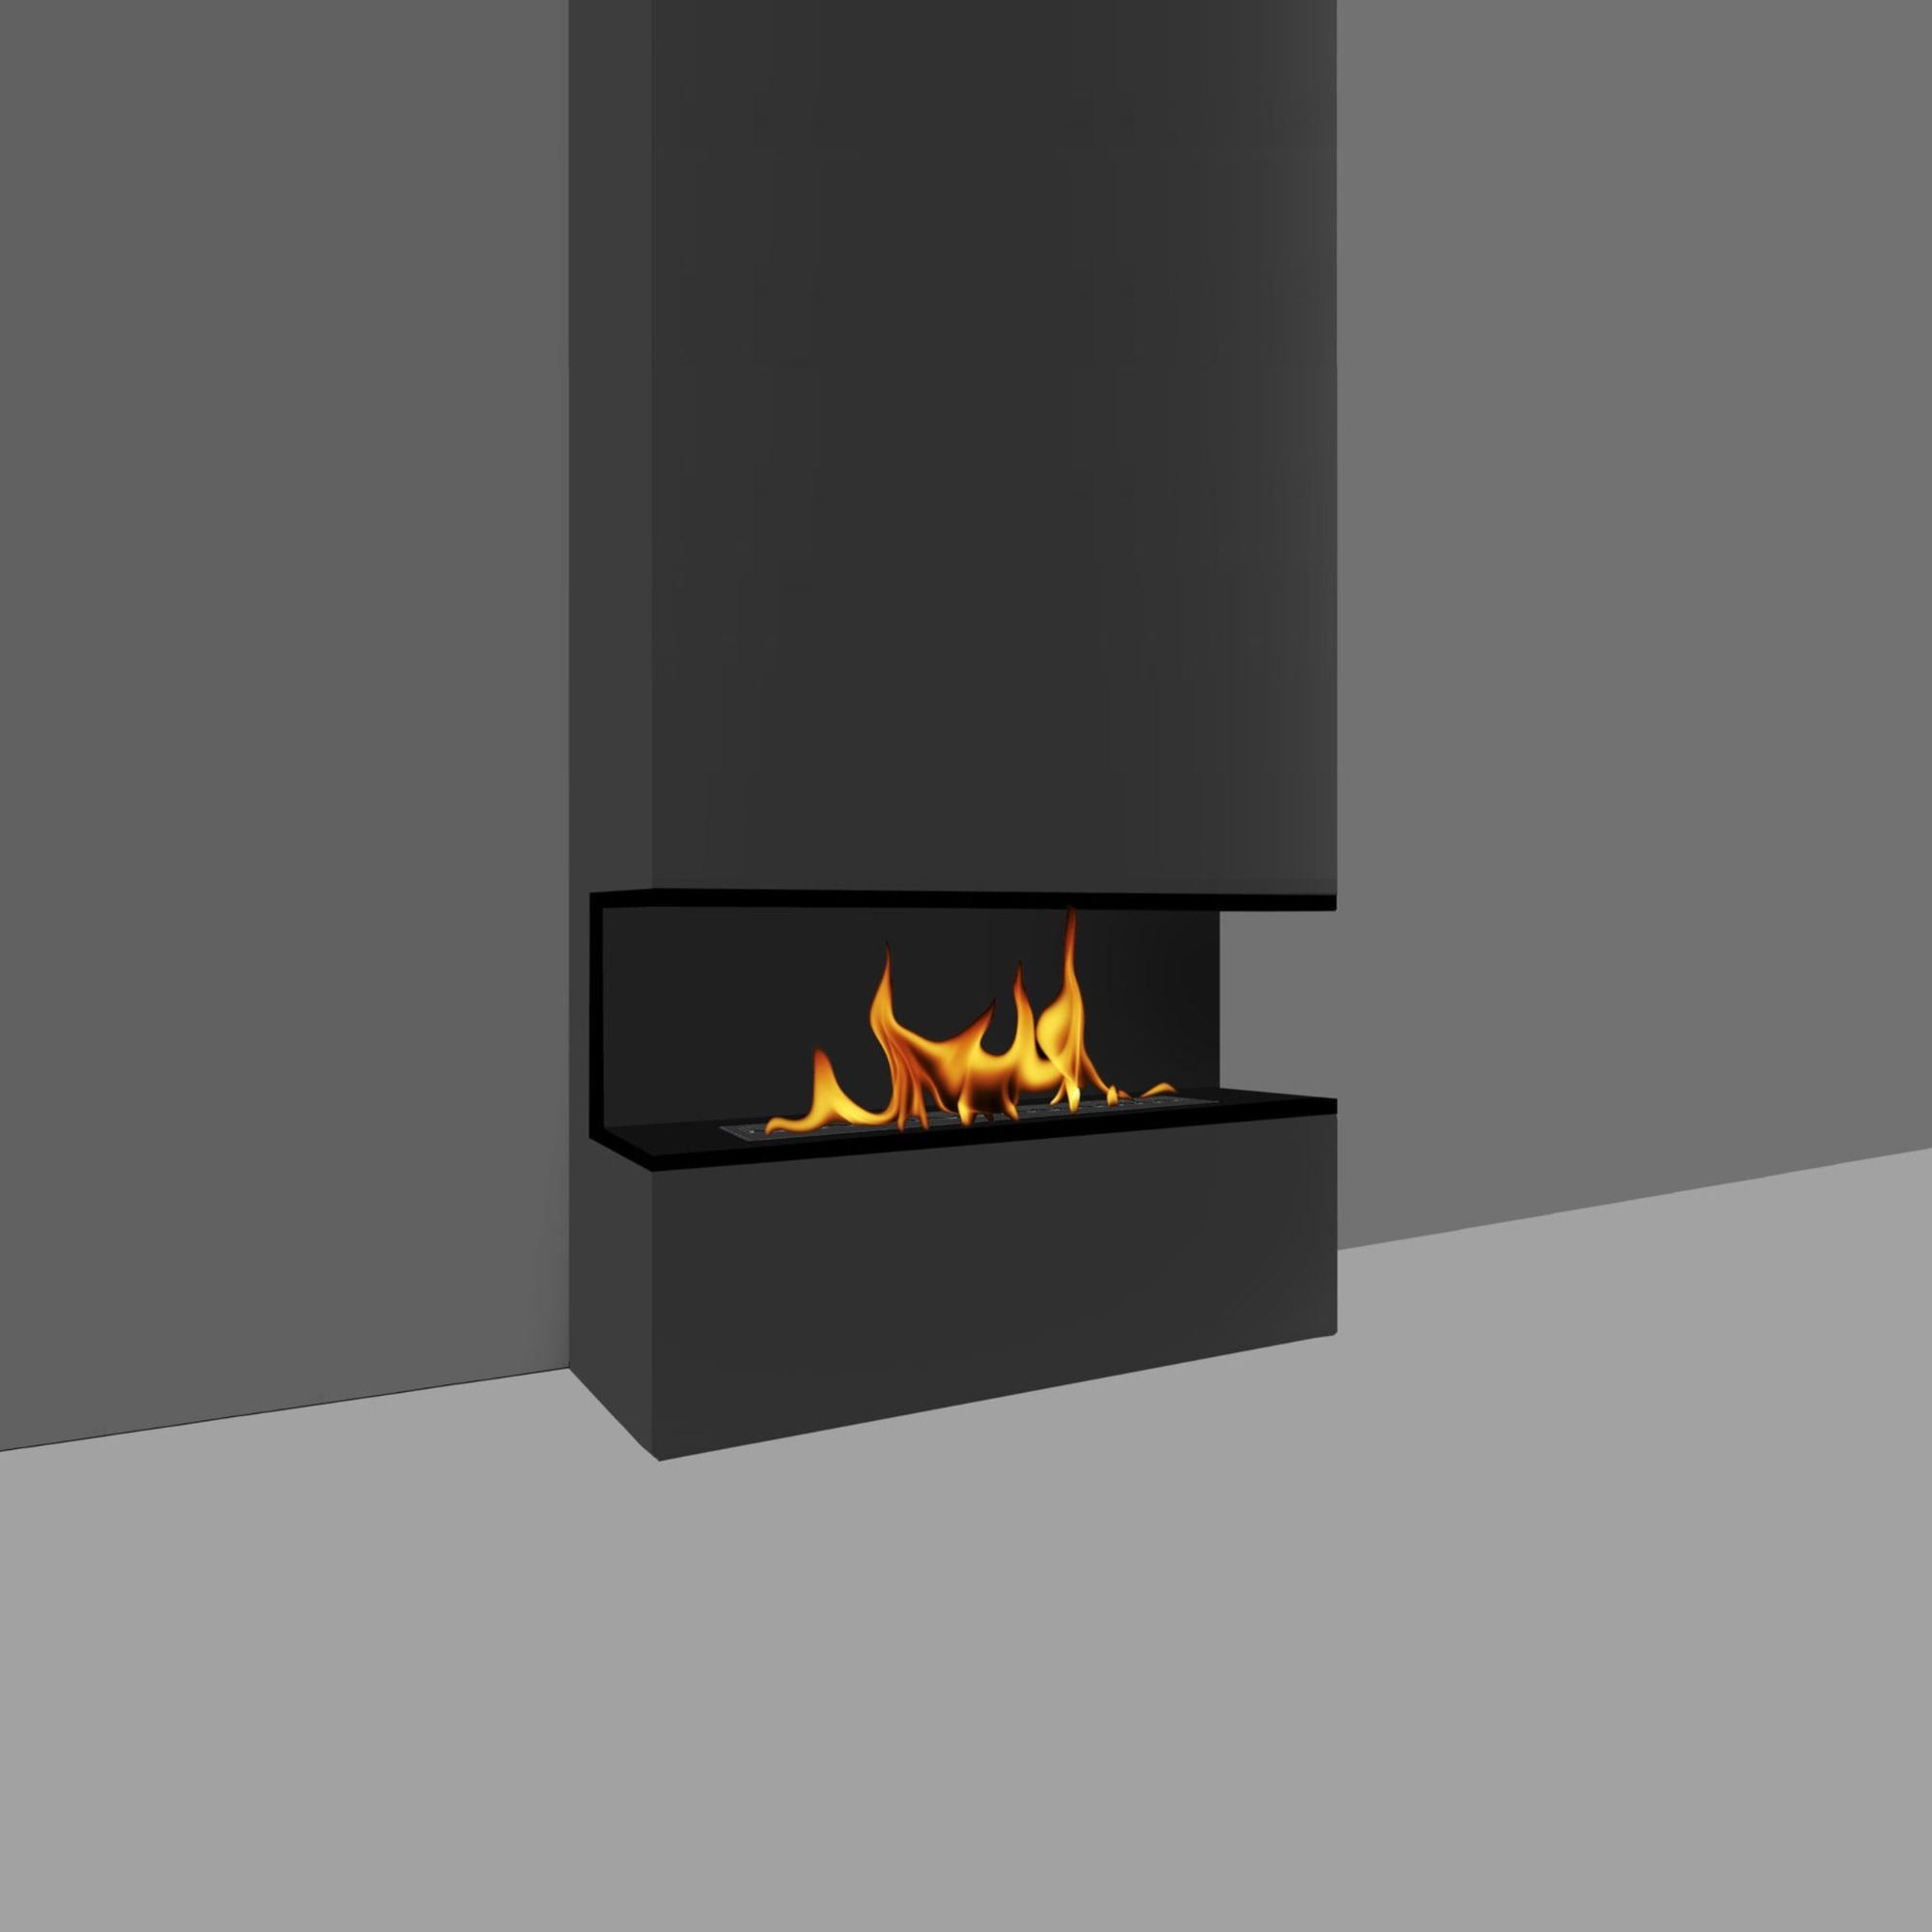 Izala Design Built-in Fireplace 110 CM